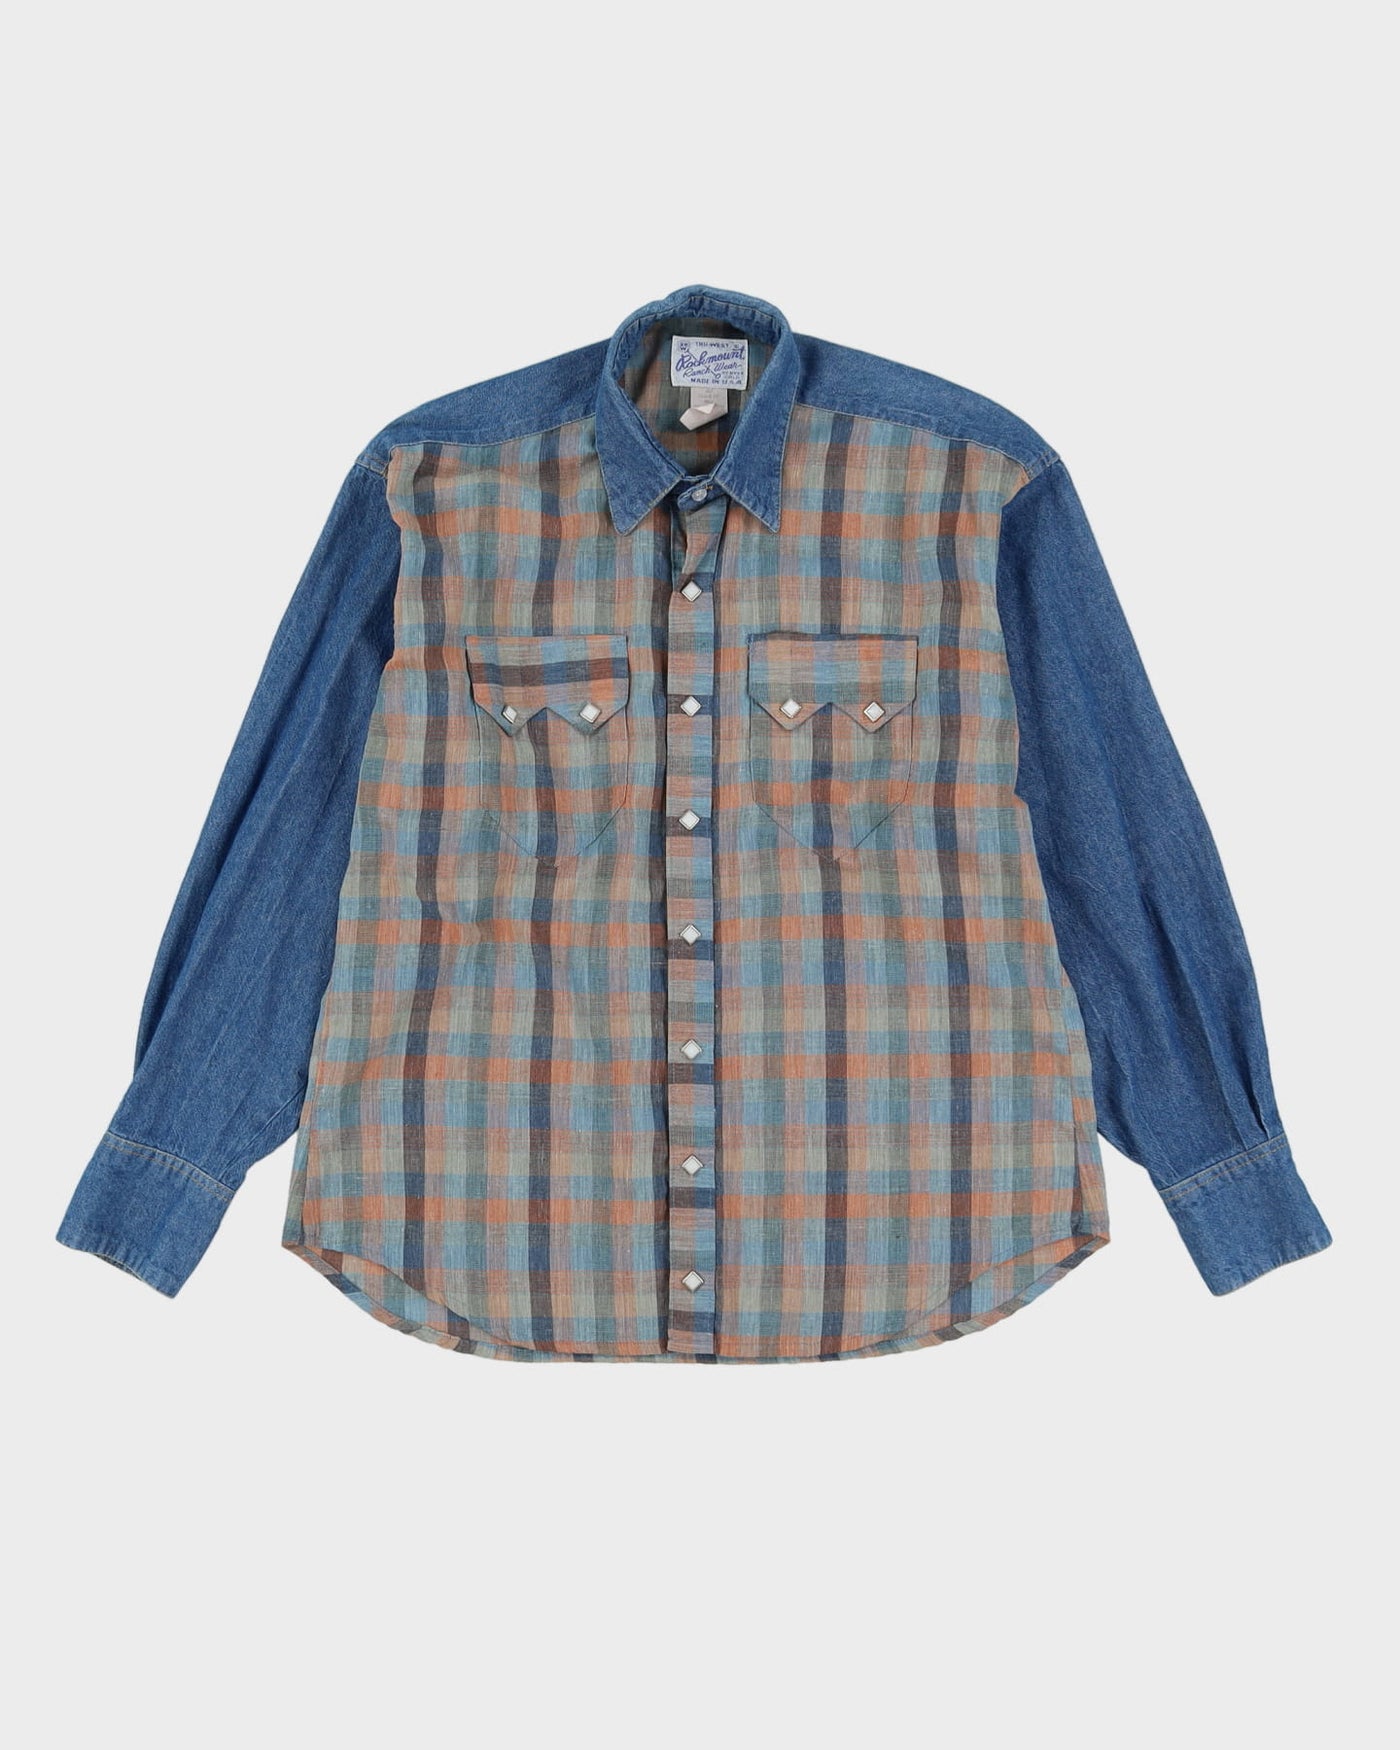 Vintage Denim Check Western Shirt - S